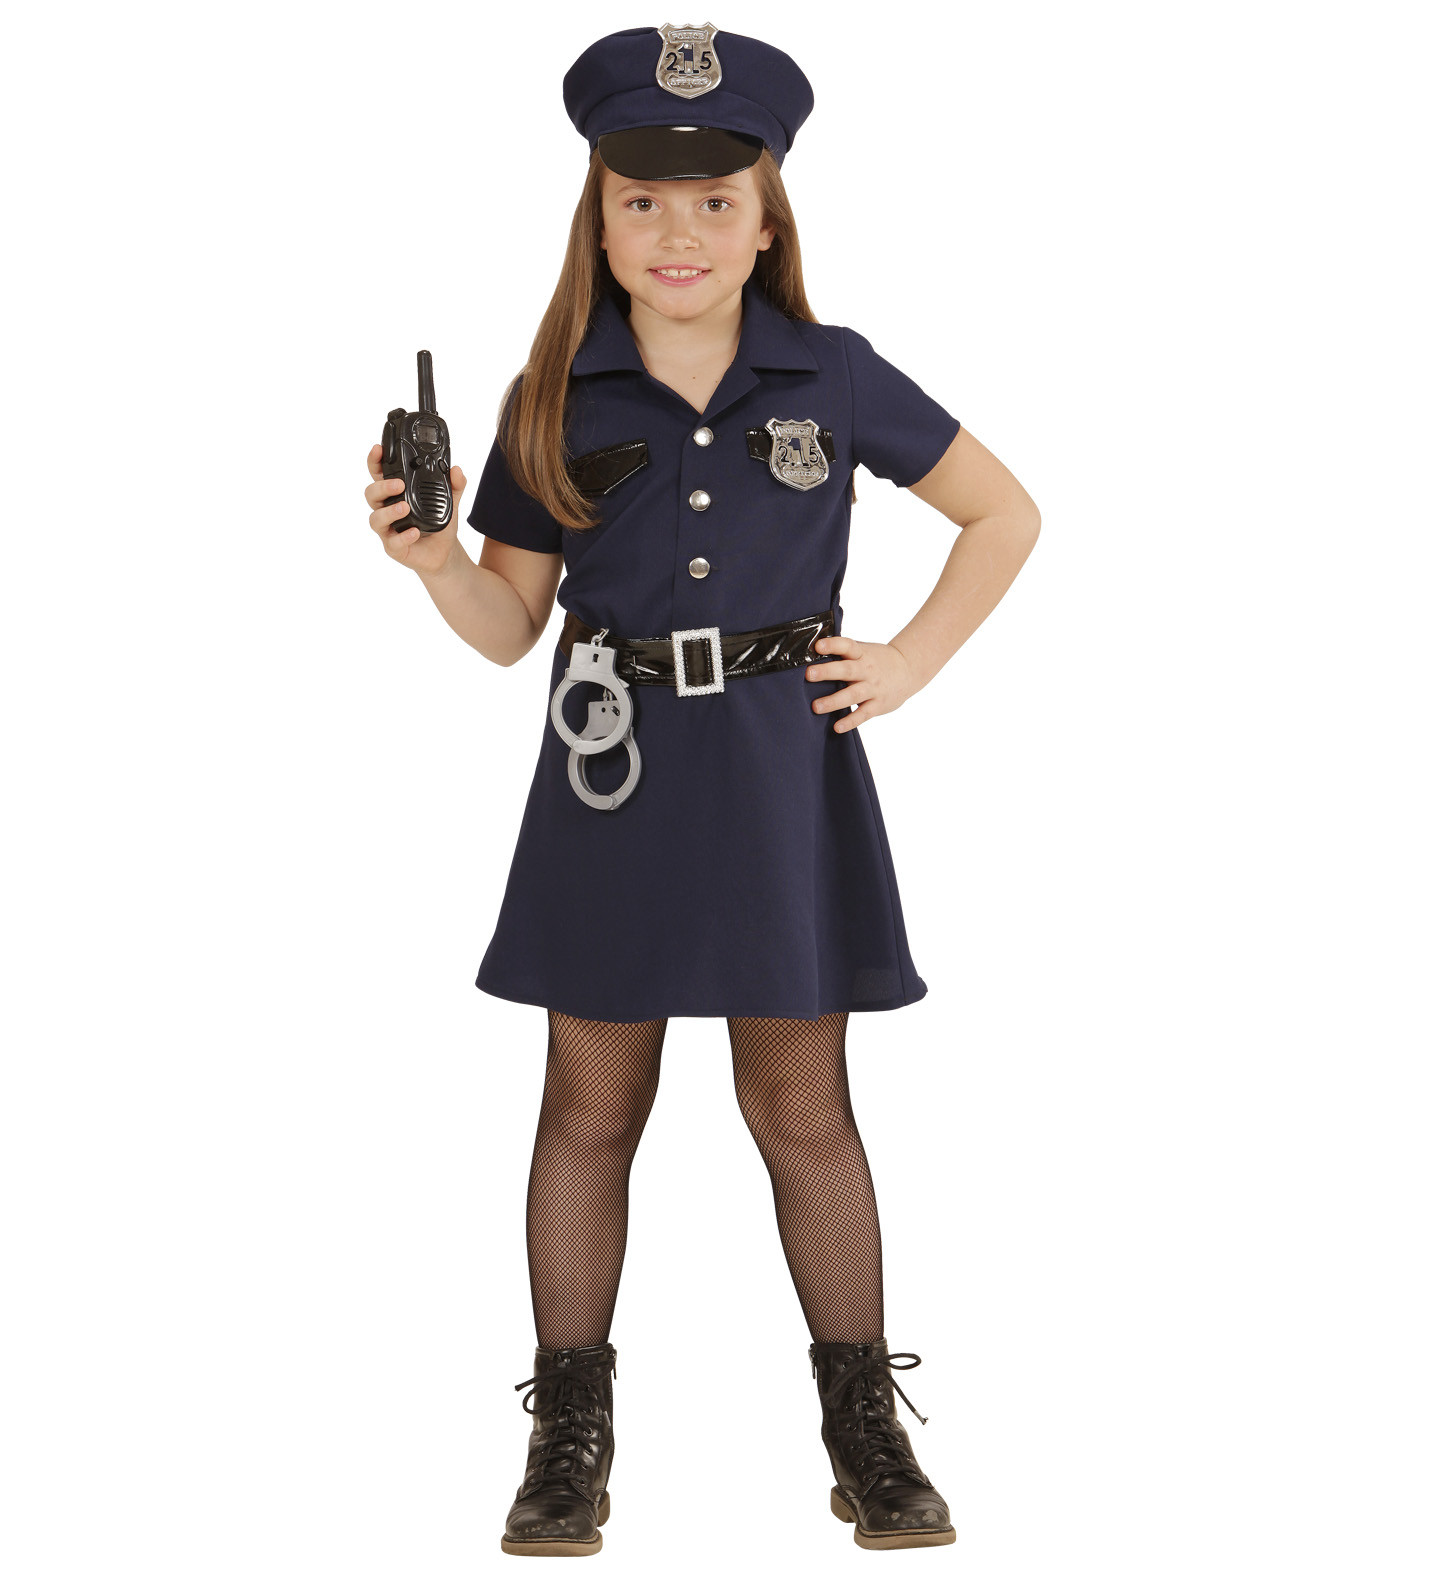 Costume Carnevale Bambina Poliziotta *22875 | Pelusciamo.com